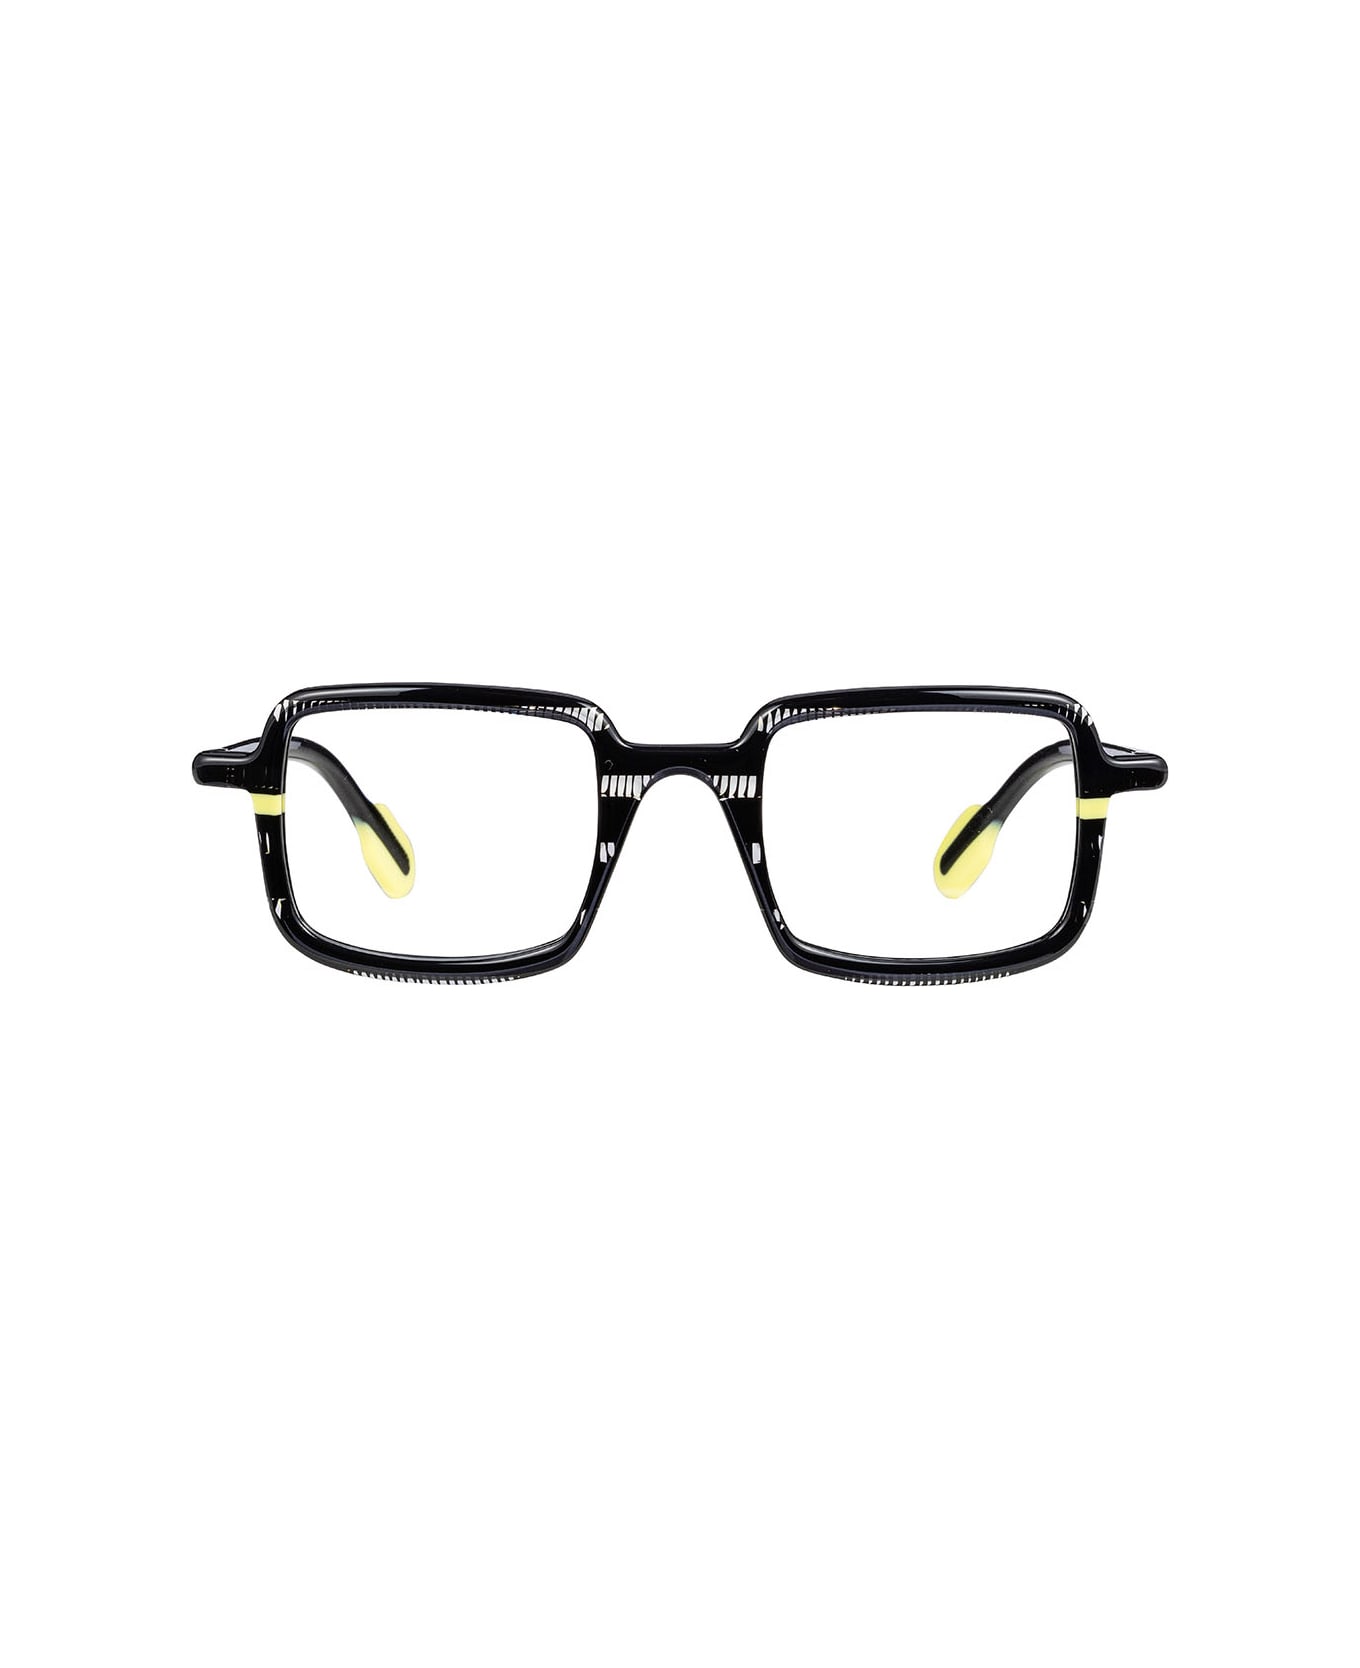 Matttew 11g44bn0a Glasses - Nero アイウェア